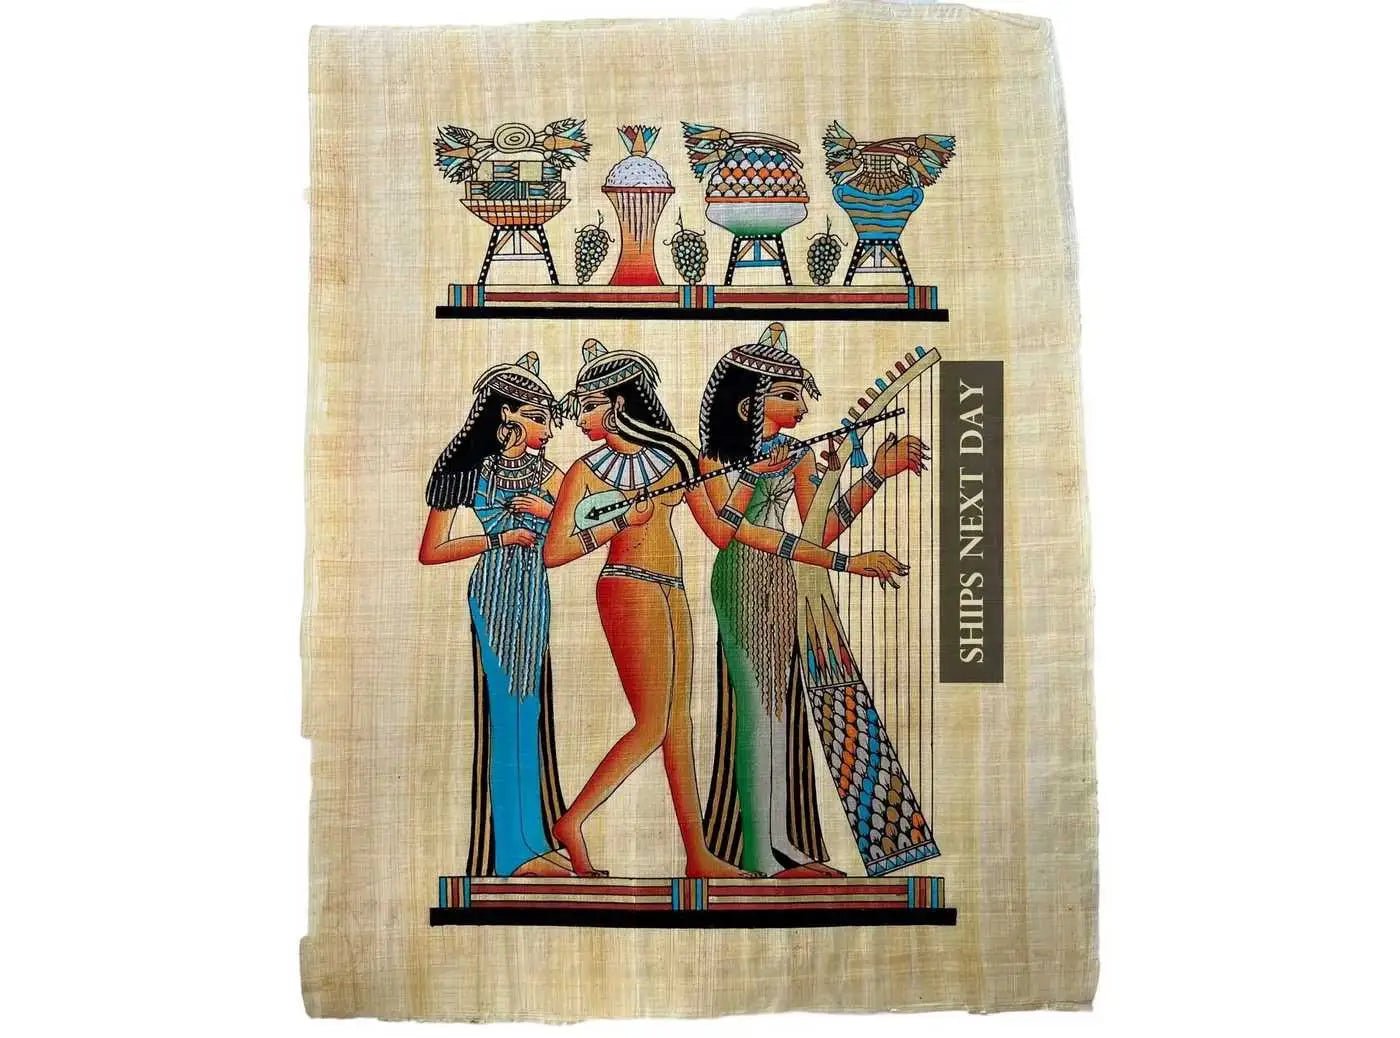 Musicians of Amun - Egypt Papyrus Painting - Authentic Papyrus Art of Ancient Egypt